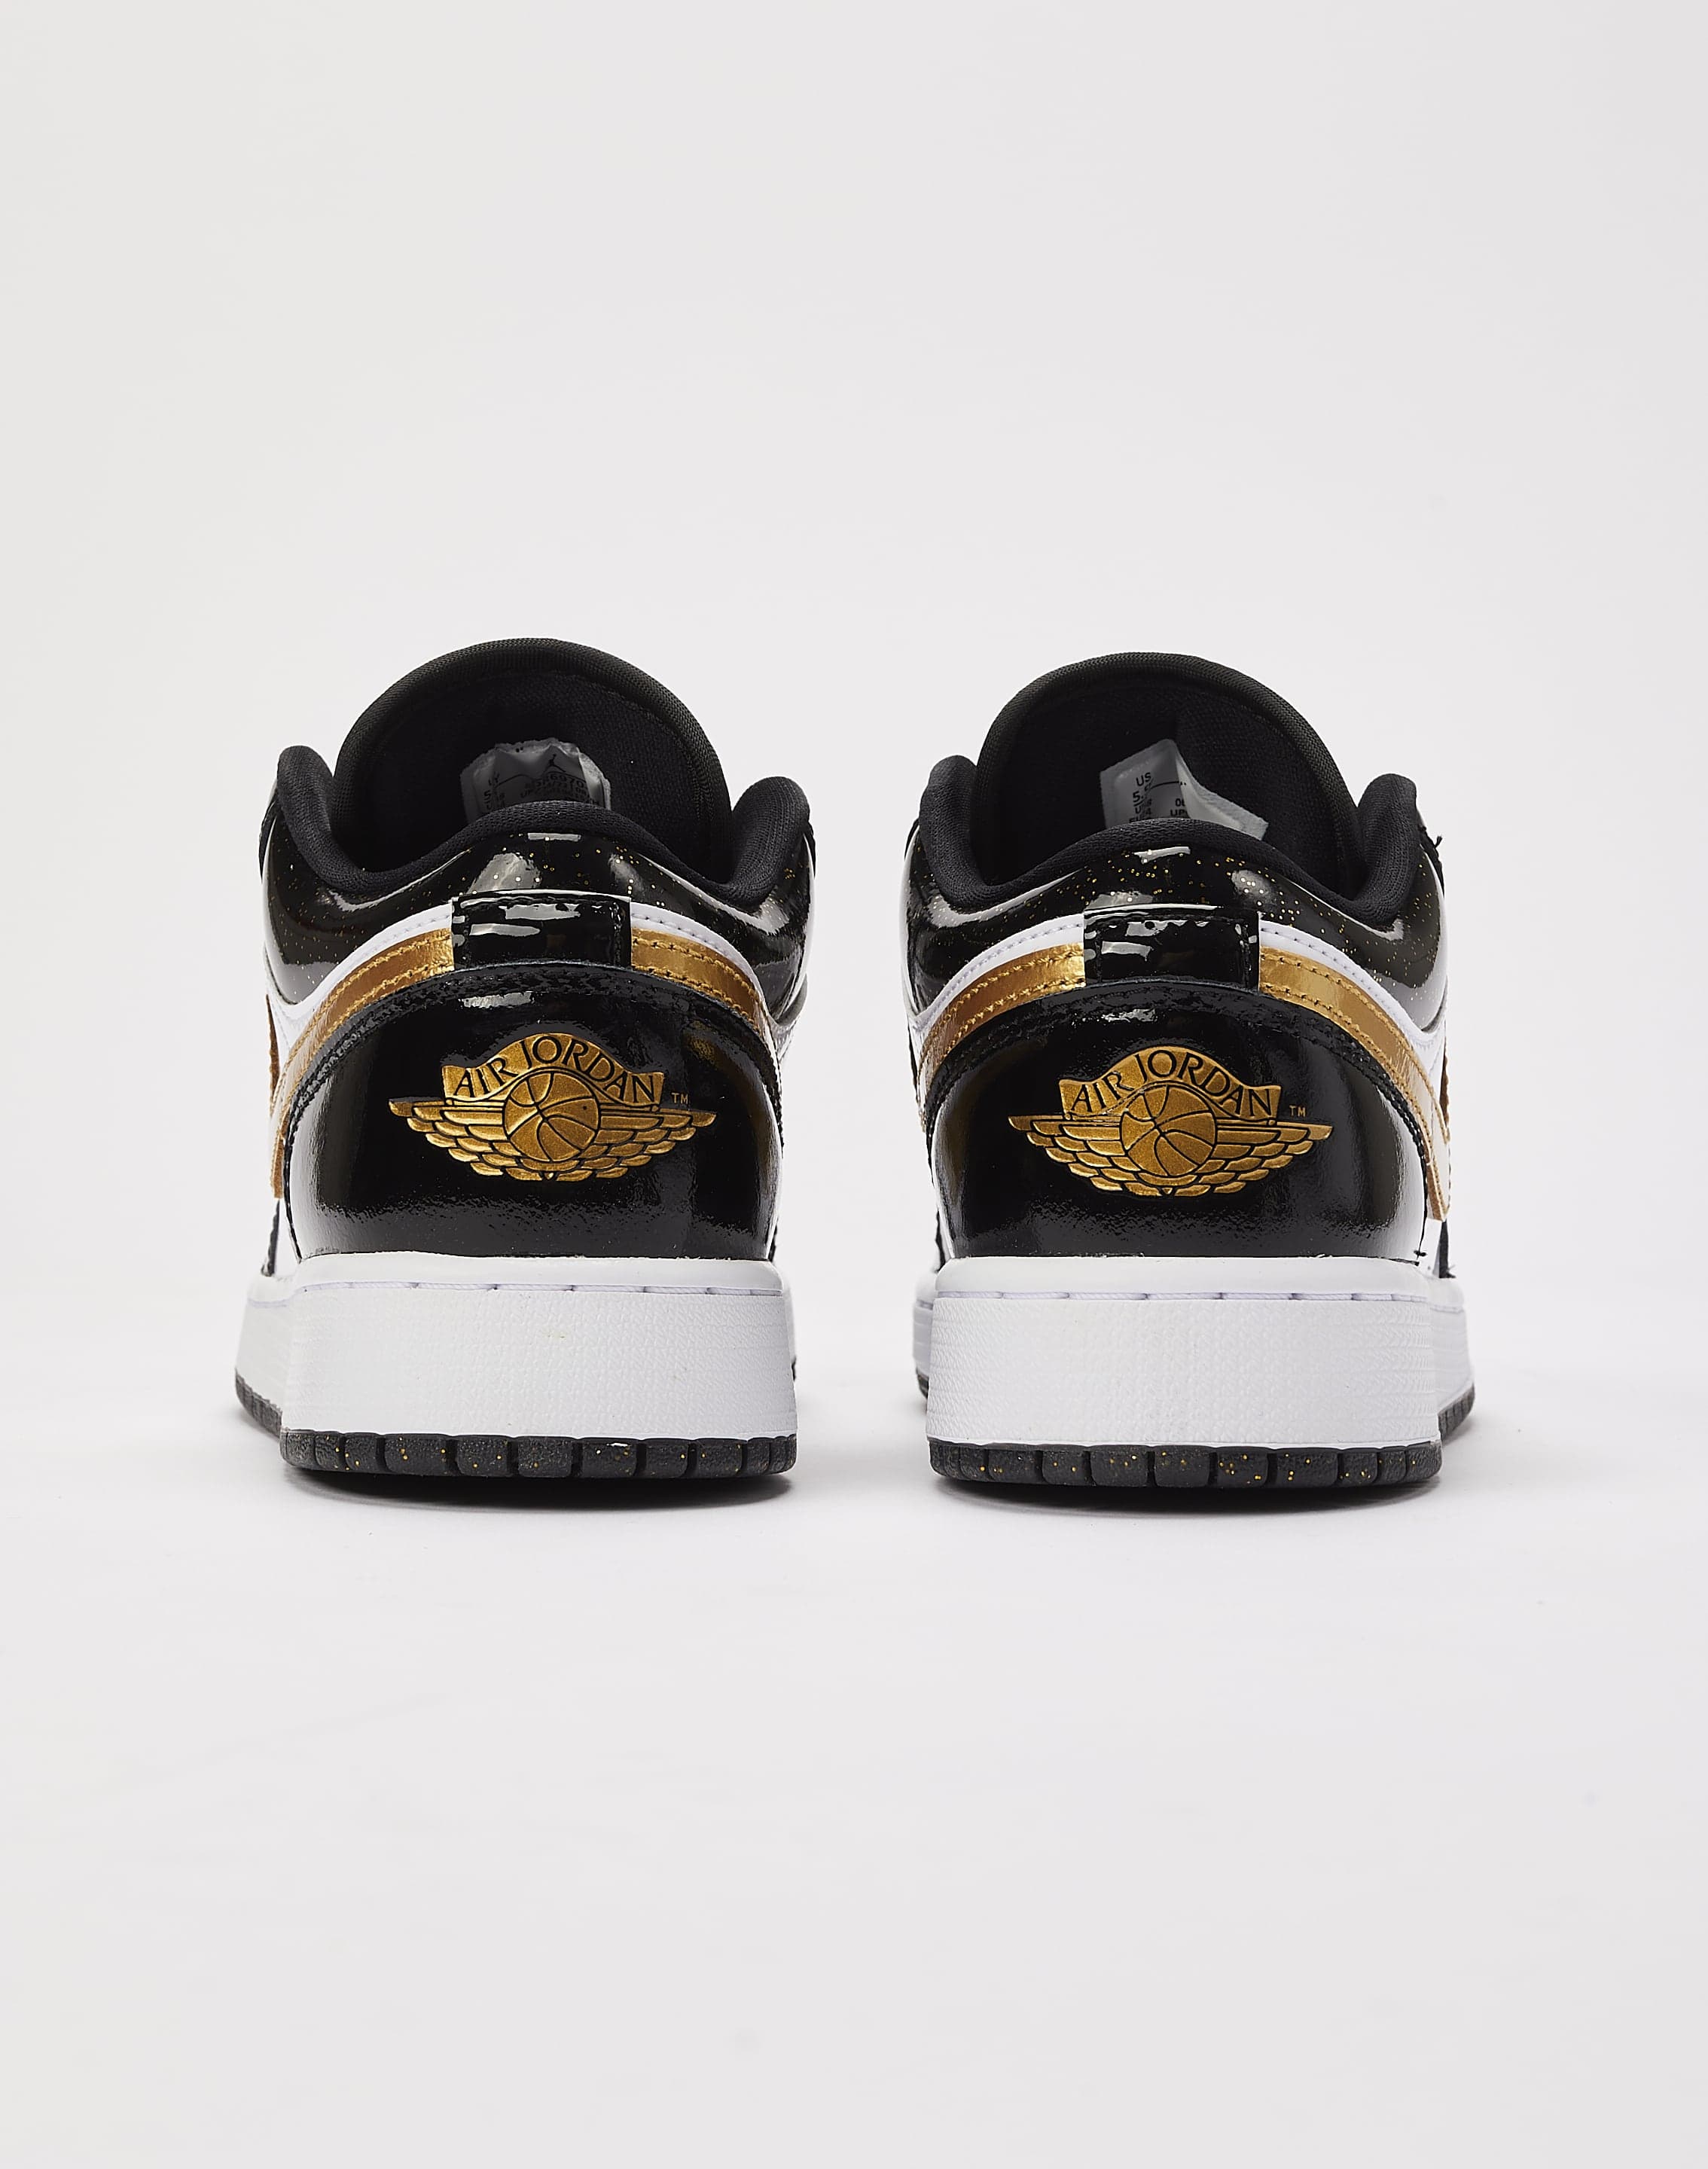 A Closer Look At The Air Jordan 1 Mid “Metallic Gold” – DTLR